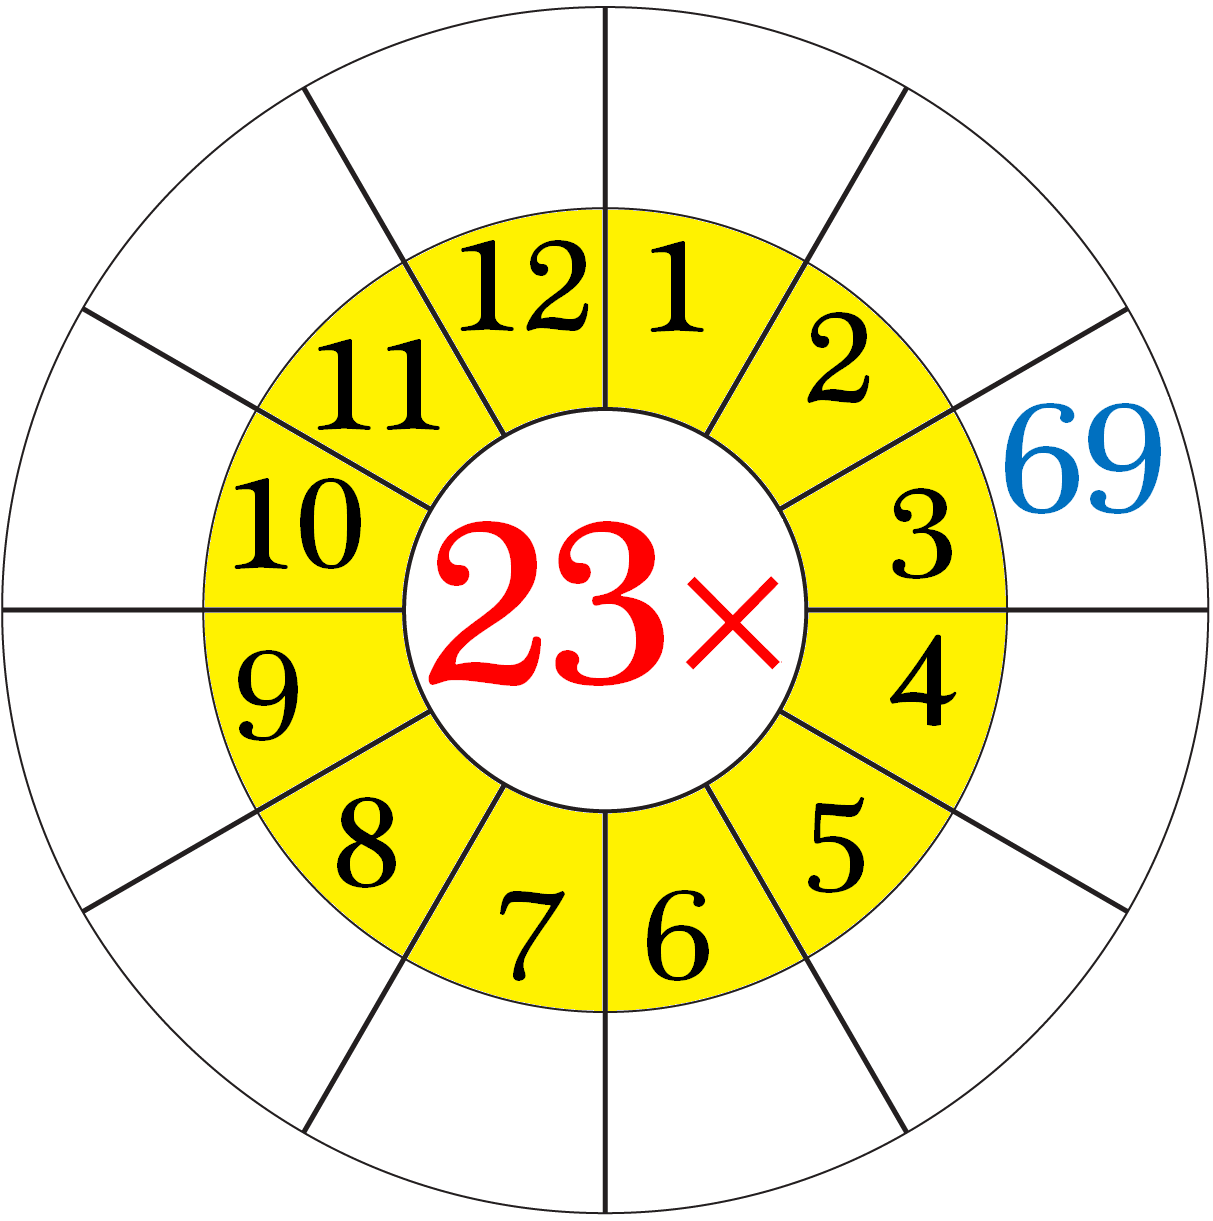 Worksheet on Multiplication Table of 23